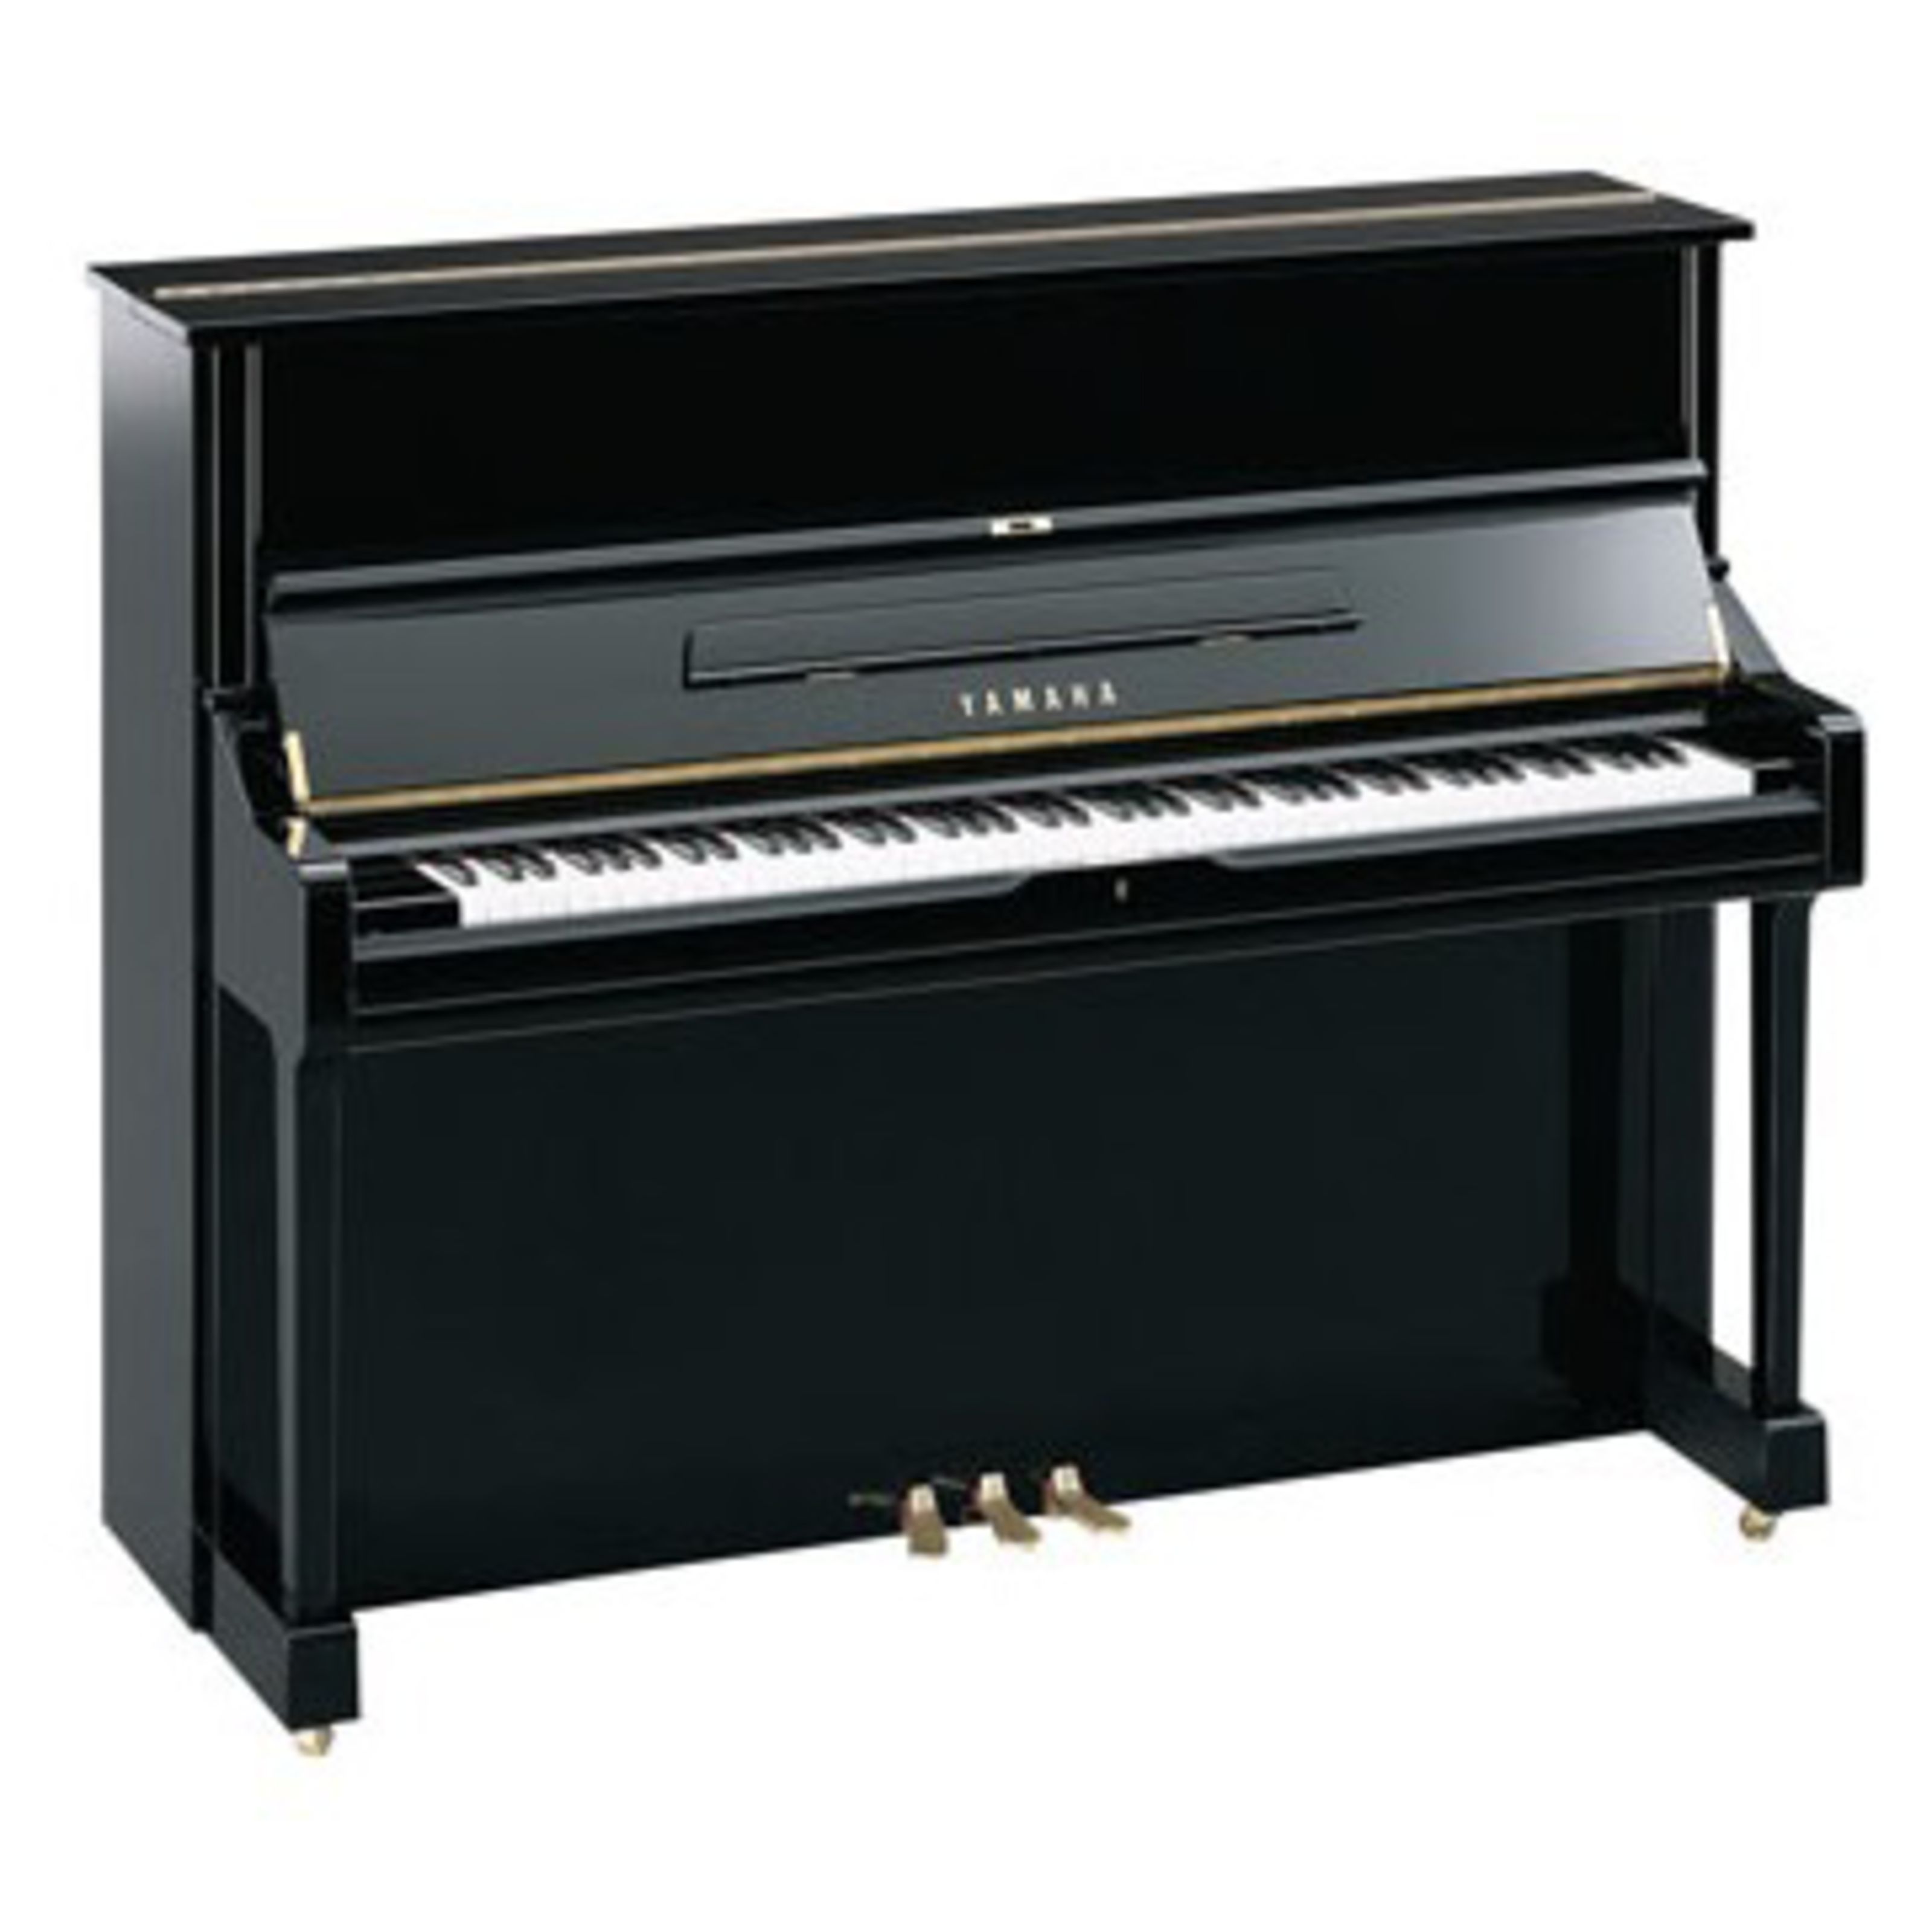 Yamaha U10BL Bj. '89 schw. pol., 121cm - Gebraucht Klavier